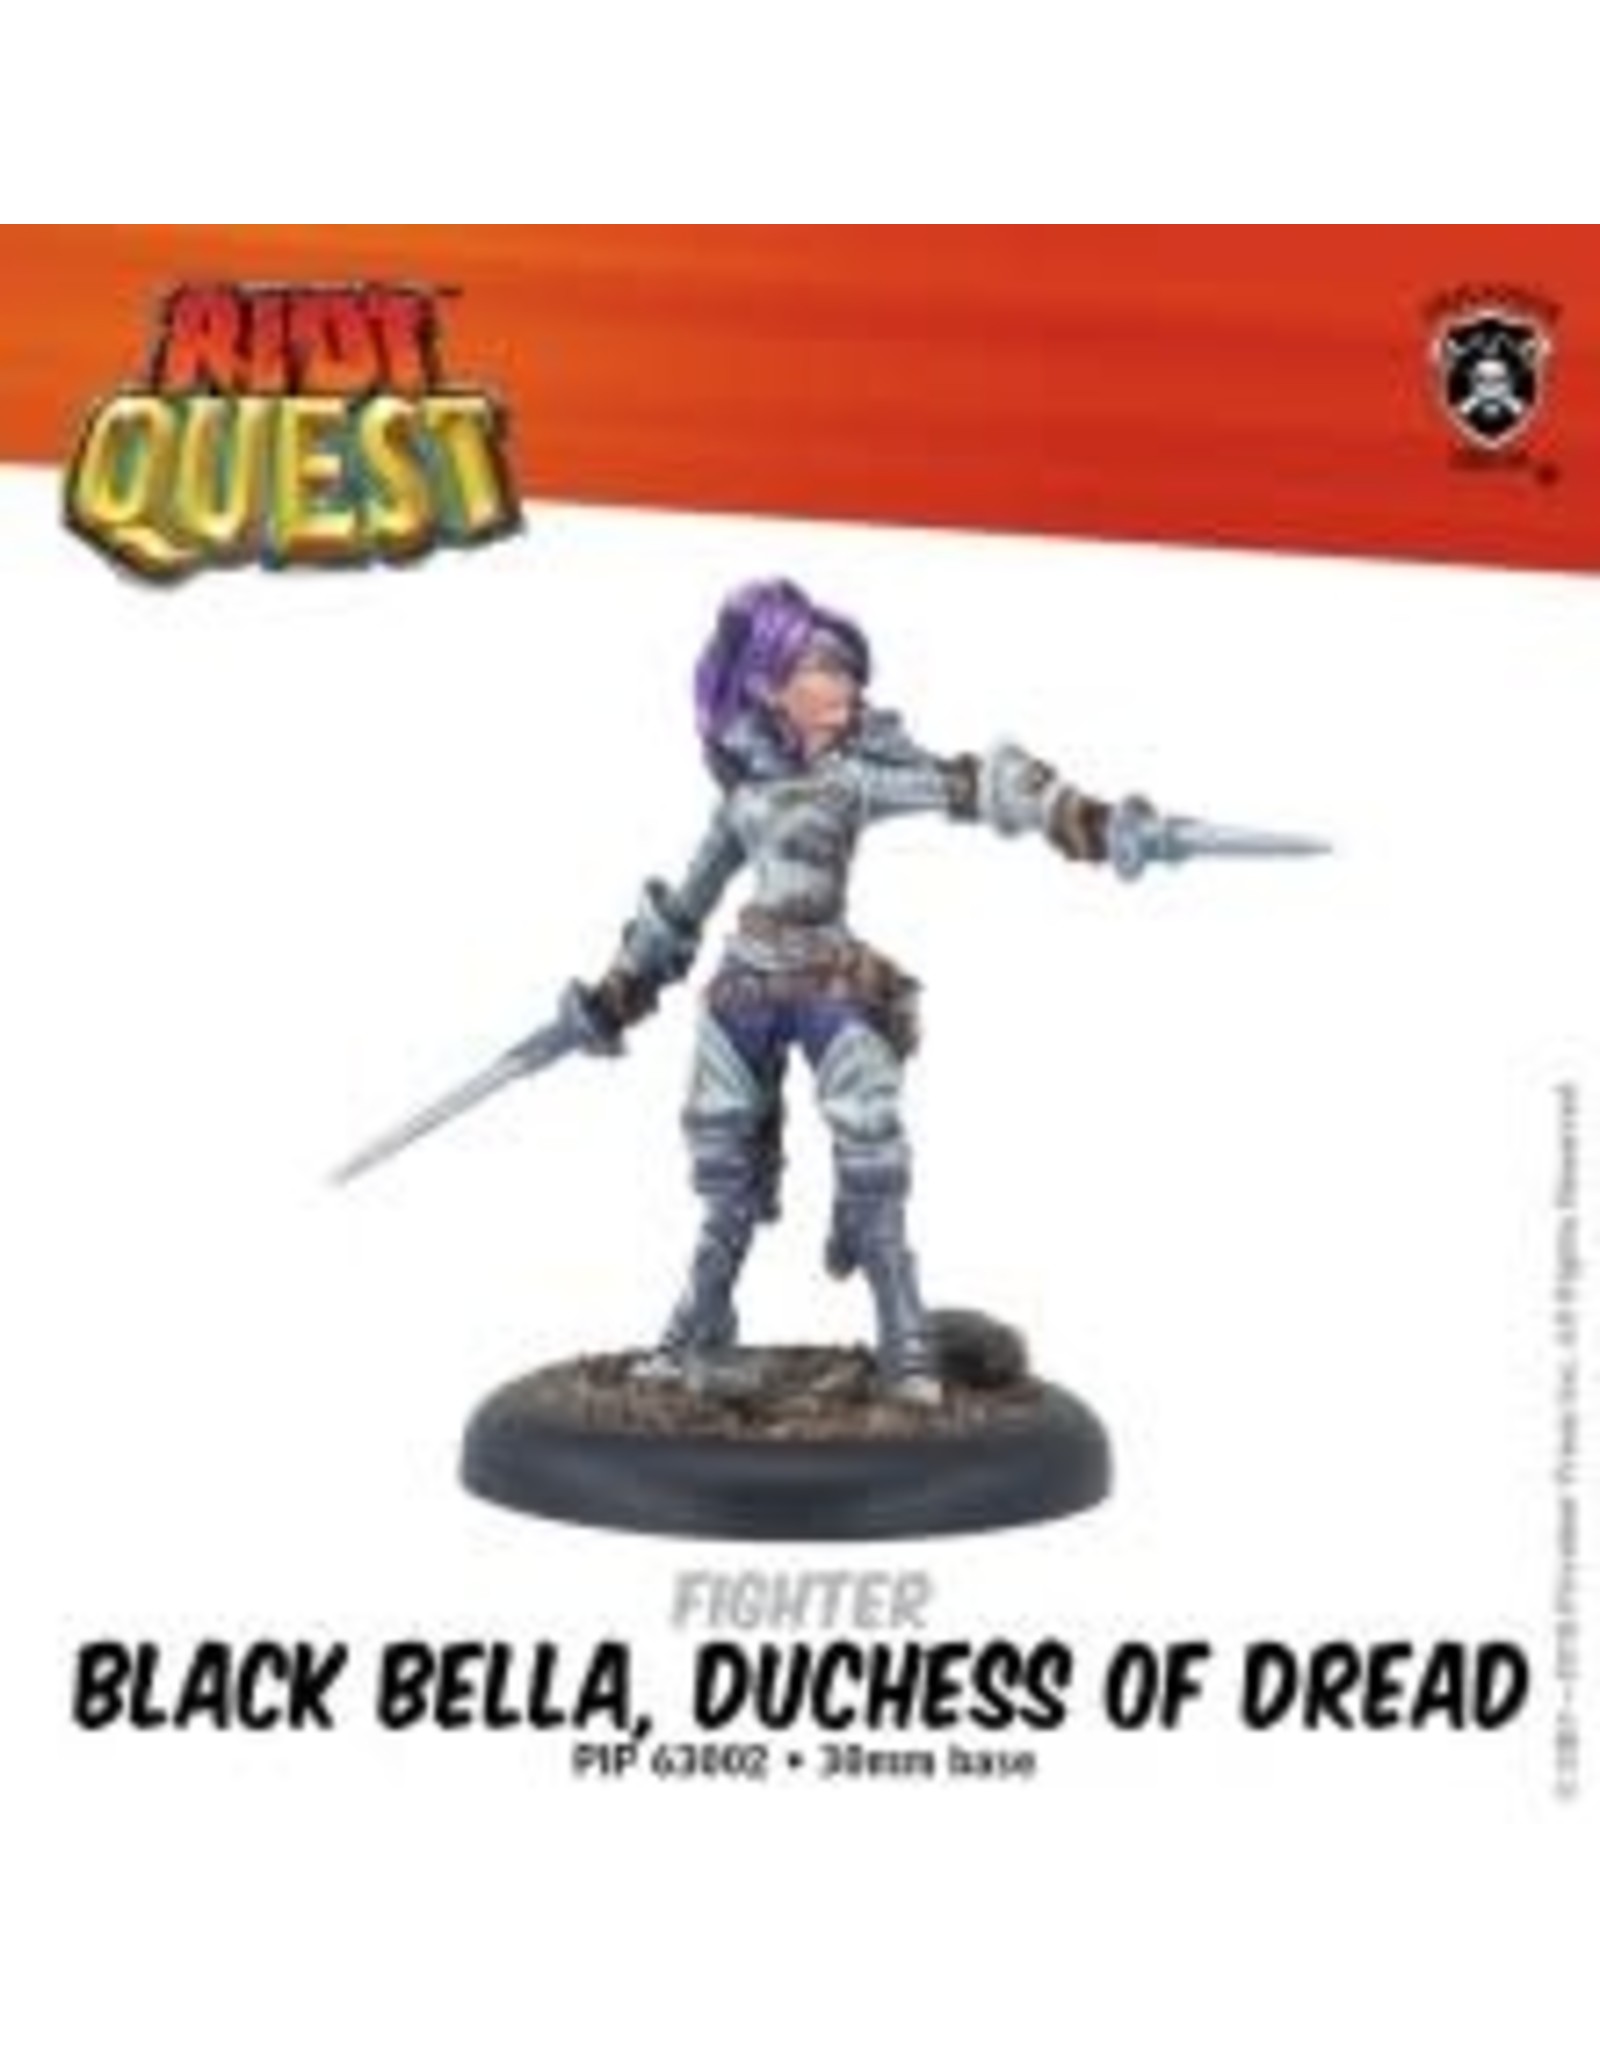 Privateer Press Black Bella, Duchess of Dread – Riot Quest Fighter